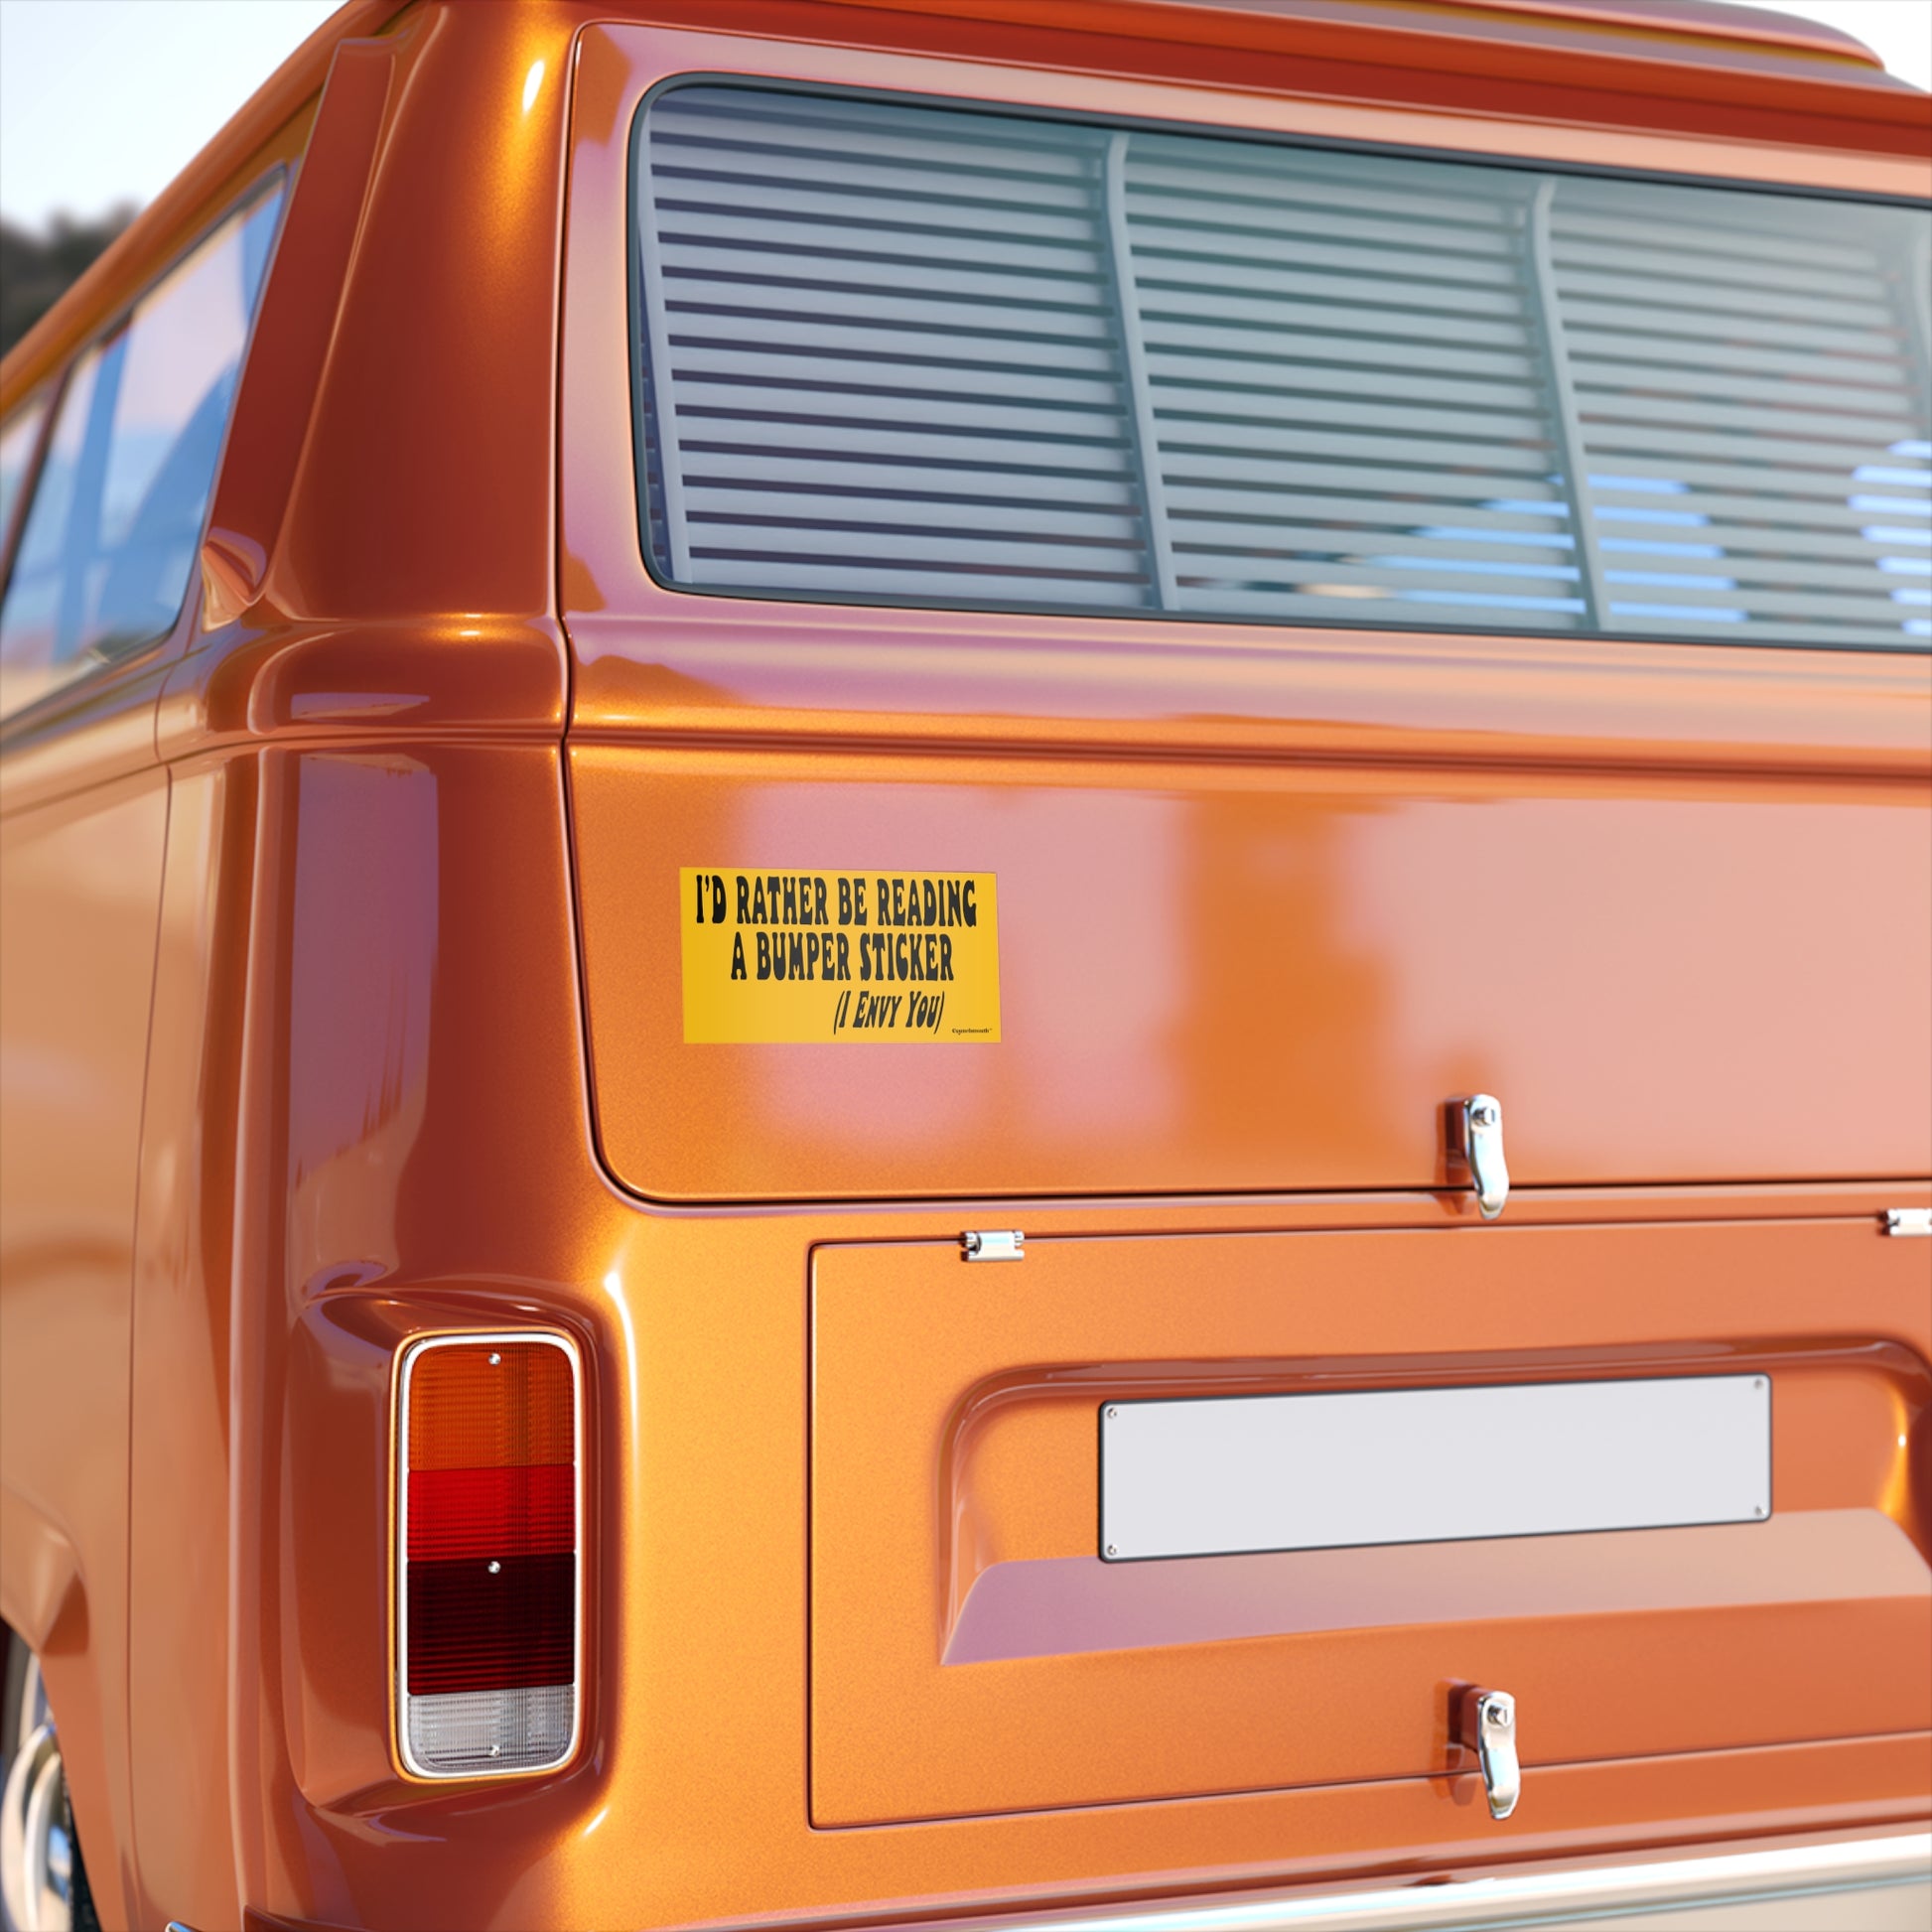 i'd rather be reading a bumper sticker 70's style bumper sticker displayed on camper van